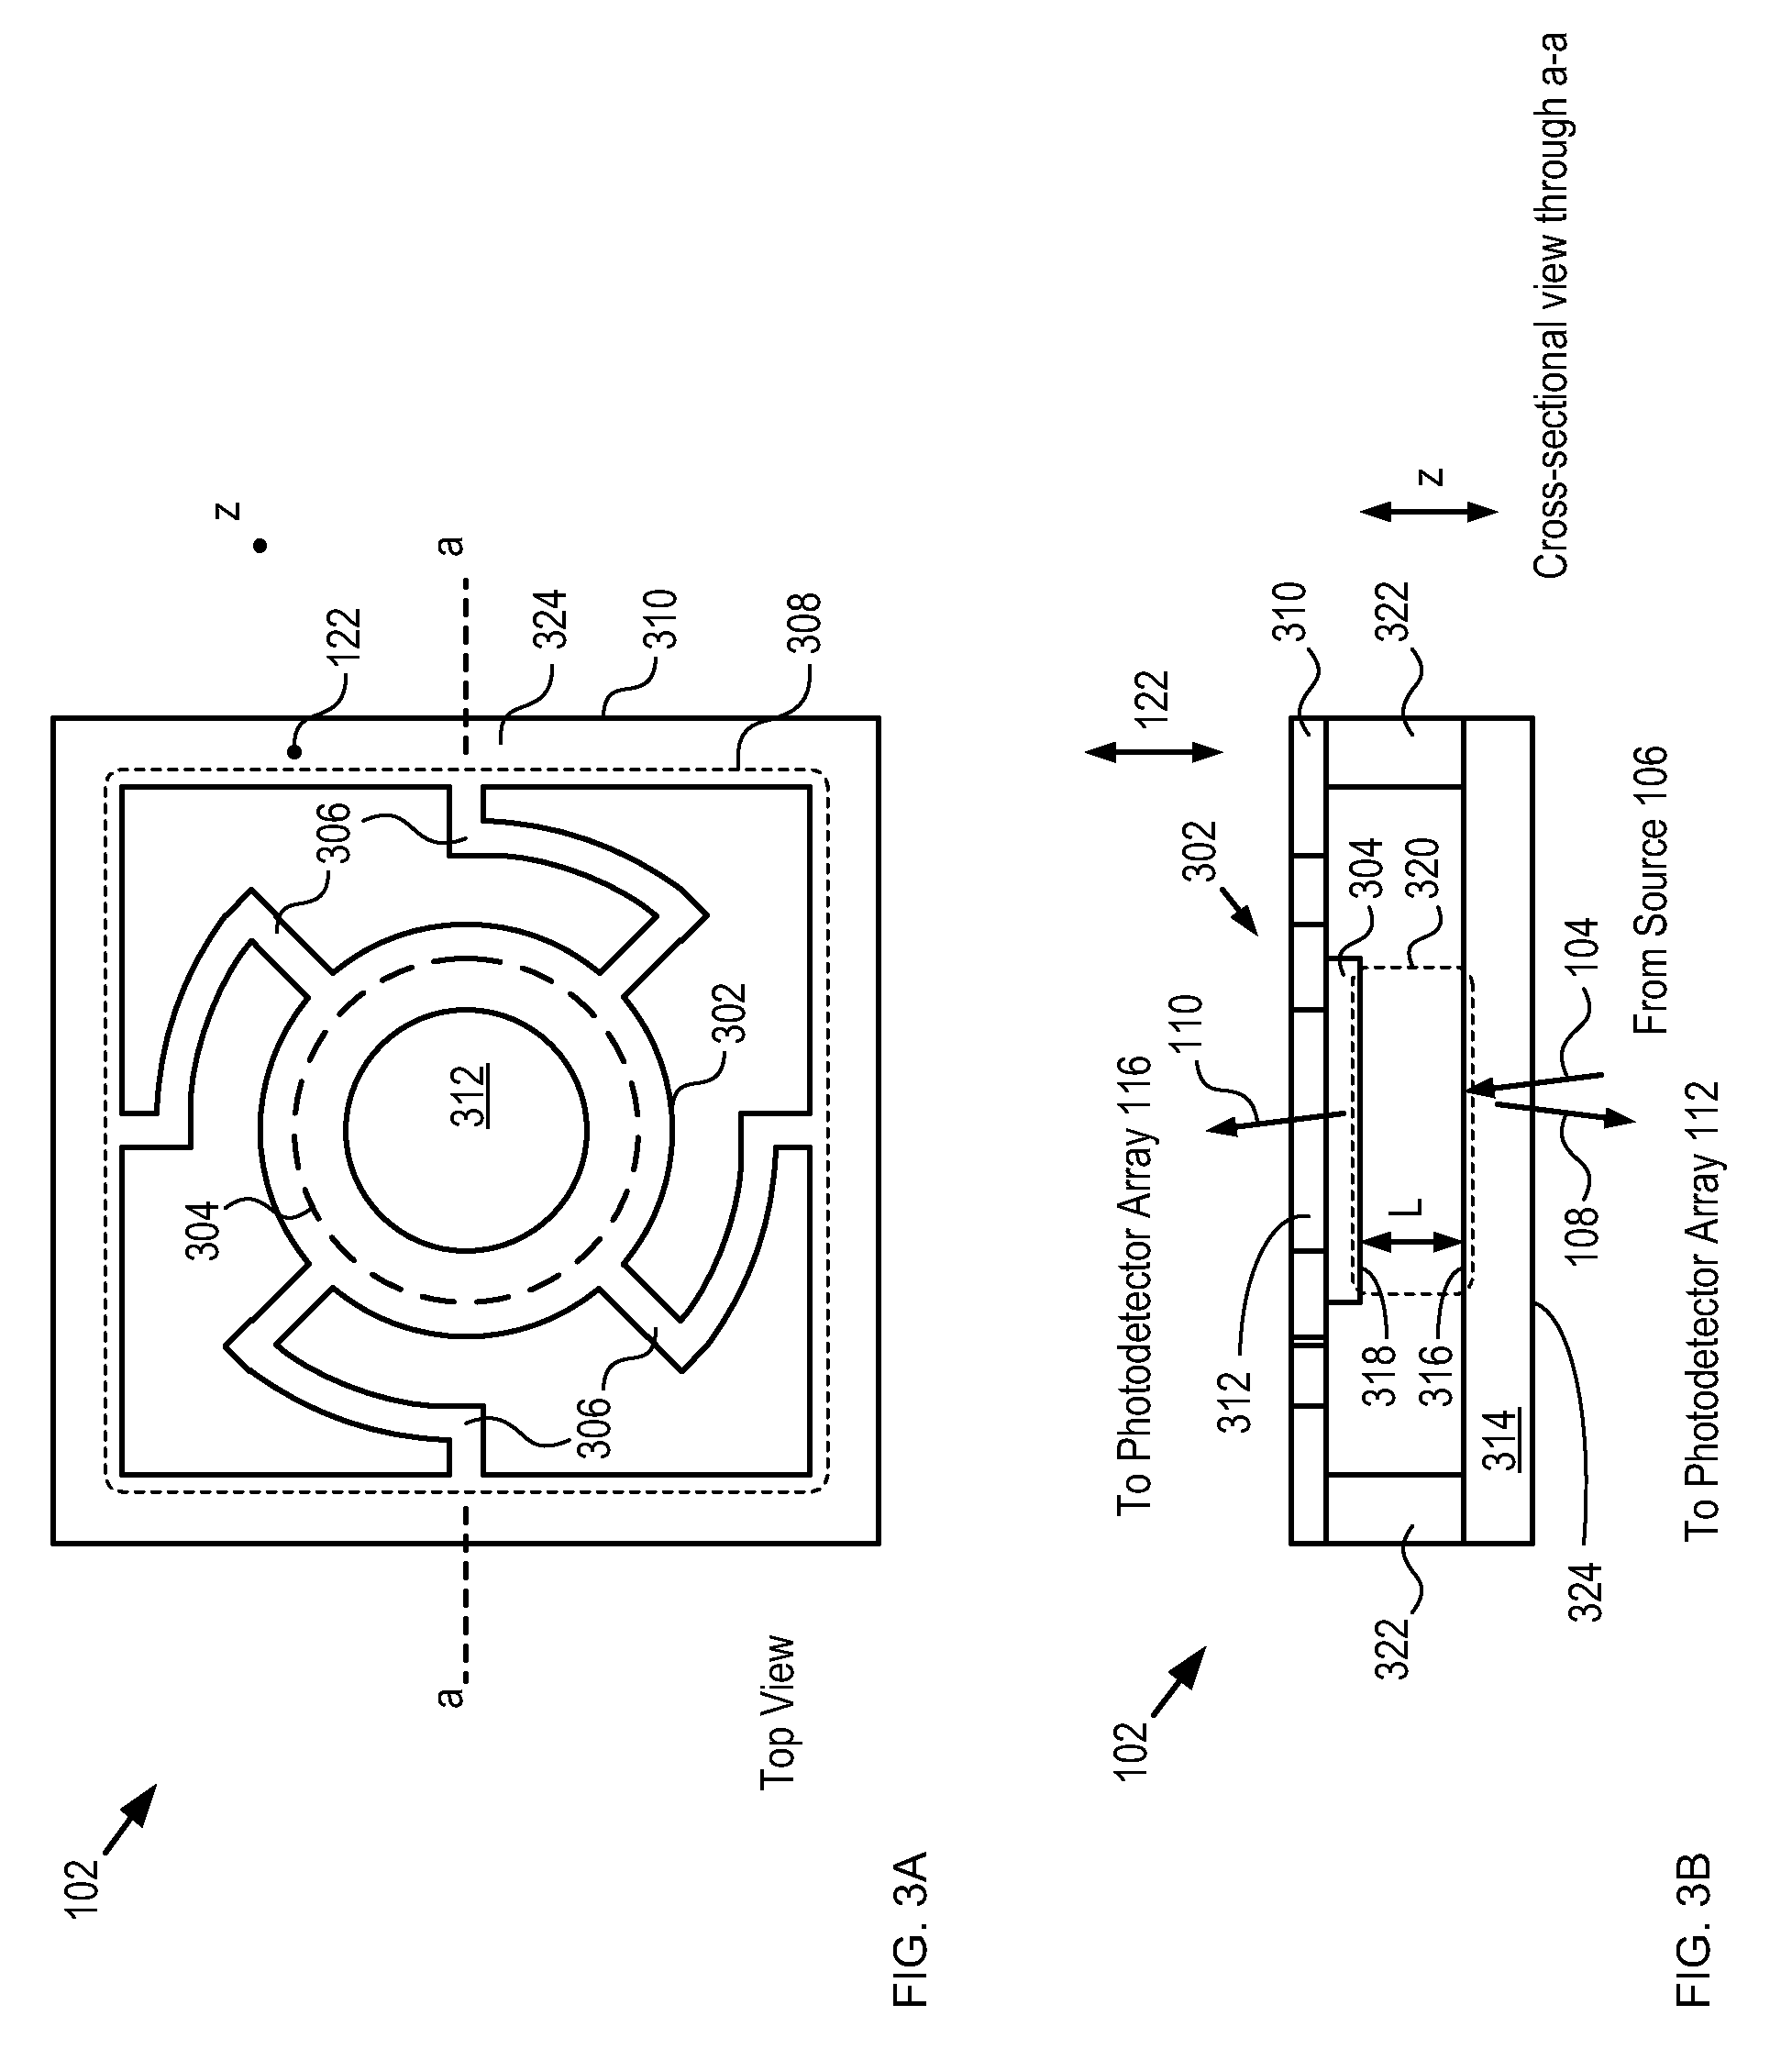 Optical Interferometric Sensor